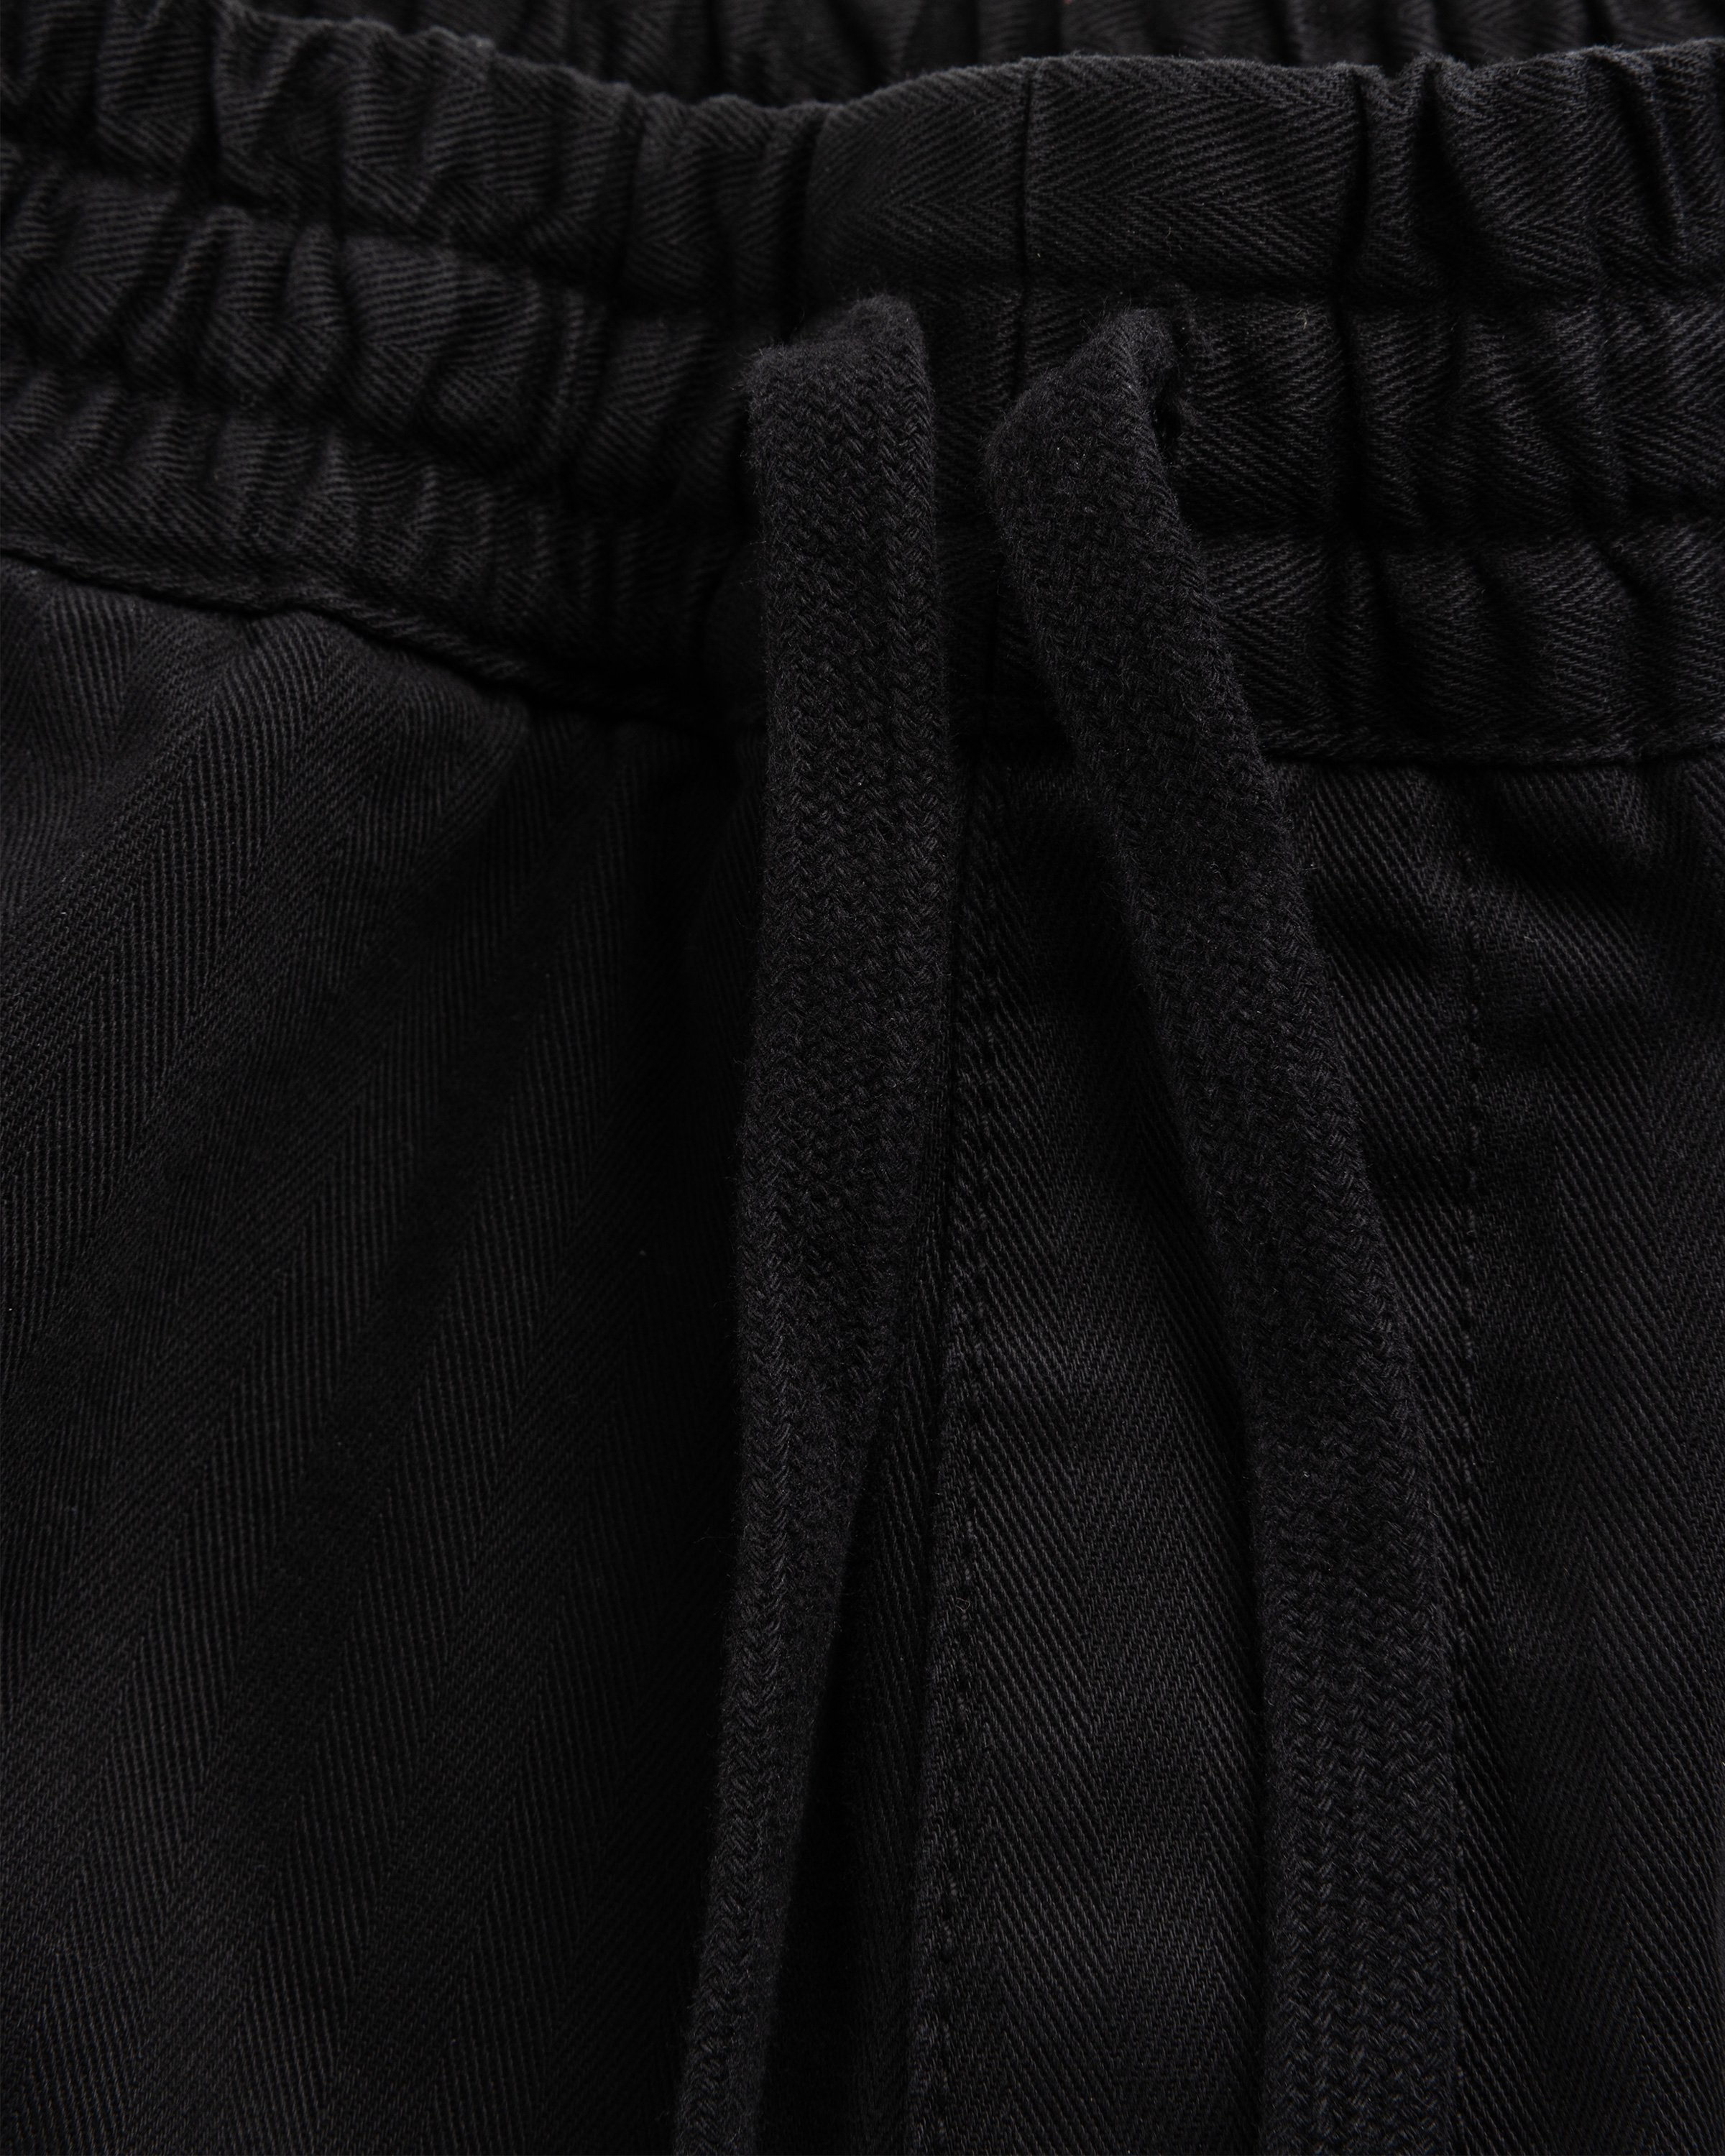 Carhartt WIP - Rainer Short Black /garment dyed - Clothing - Black - Image 6